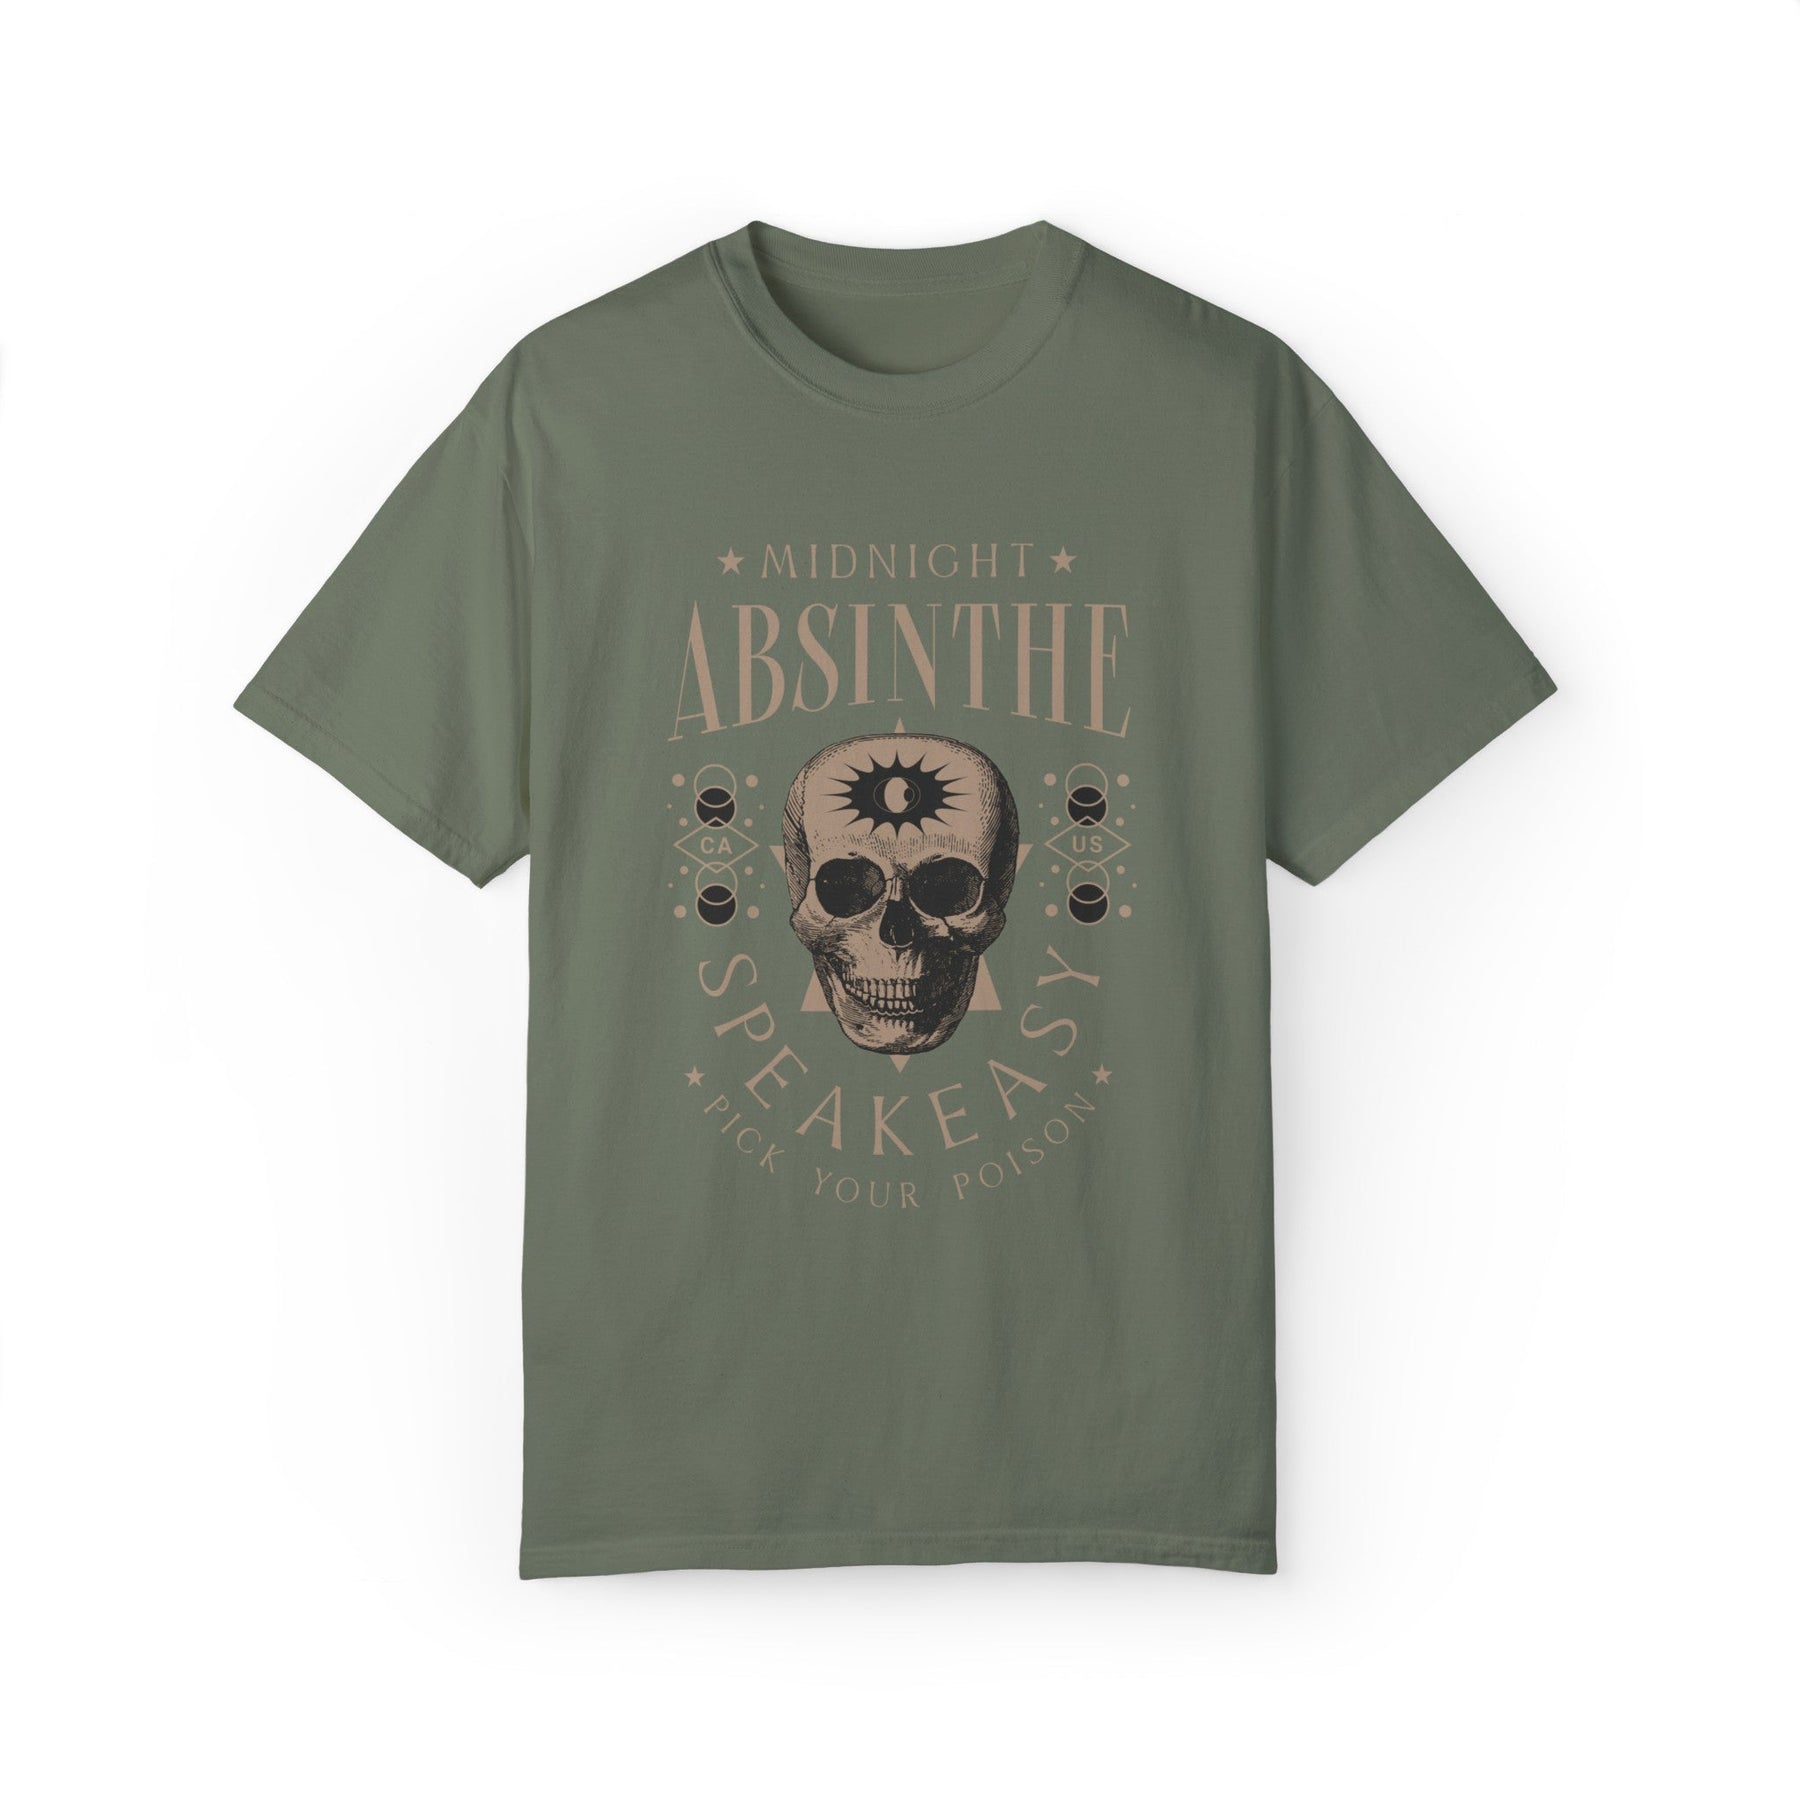 Midnight Absinthe Oversized Beefy Tee - Goth Cloth Co.T - Shirt29864334540682298532